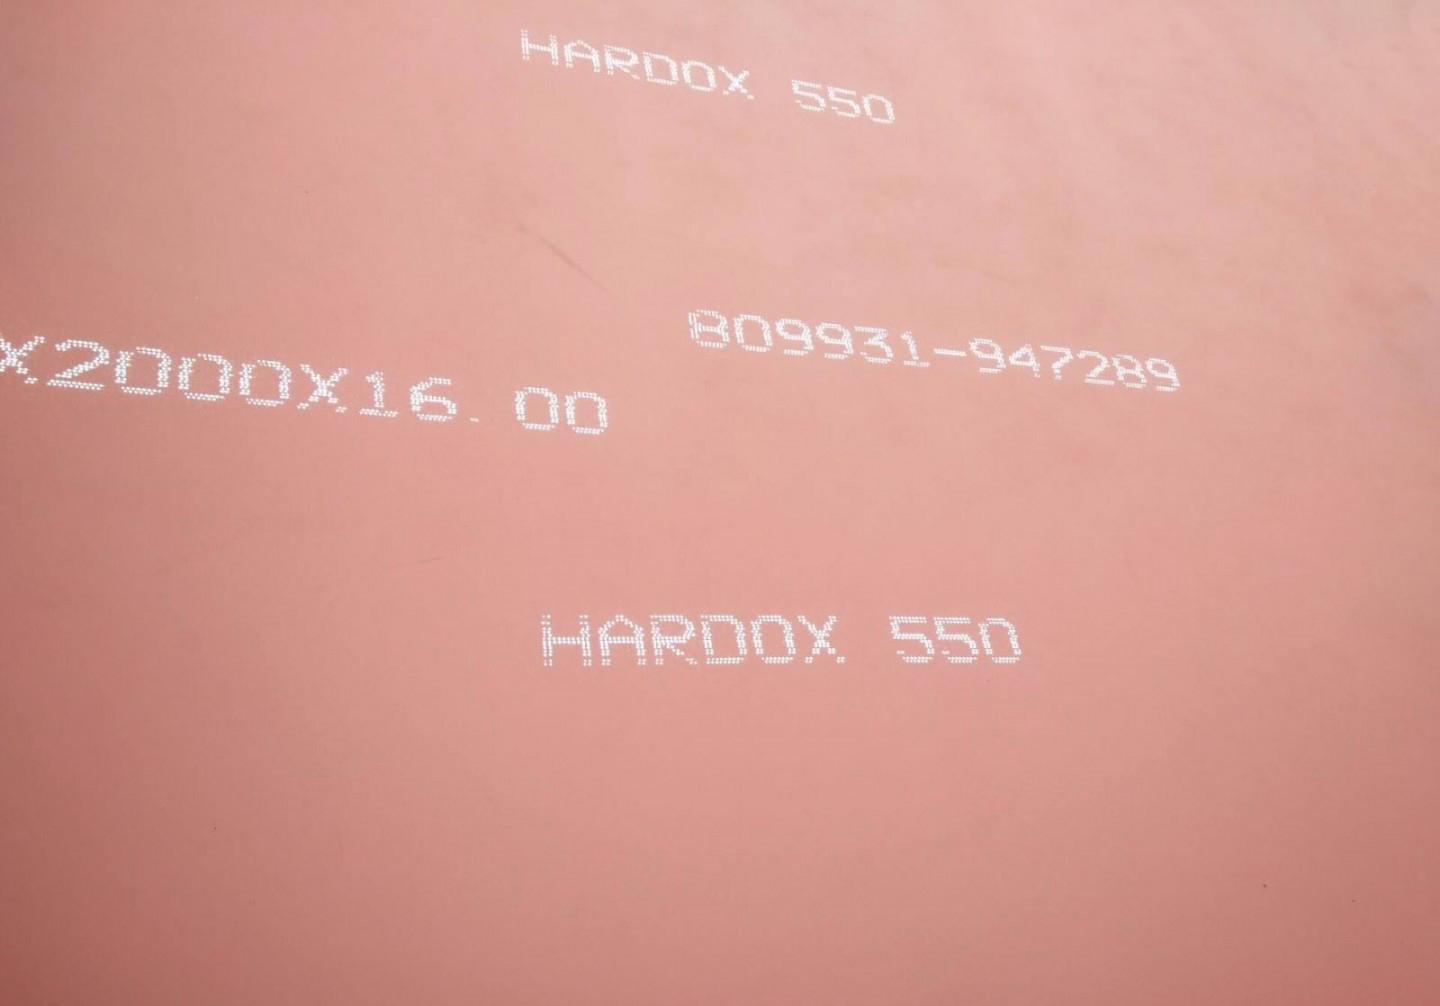 Hardox 550